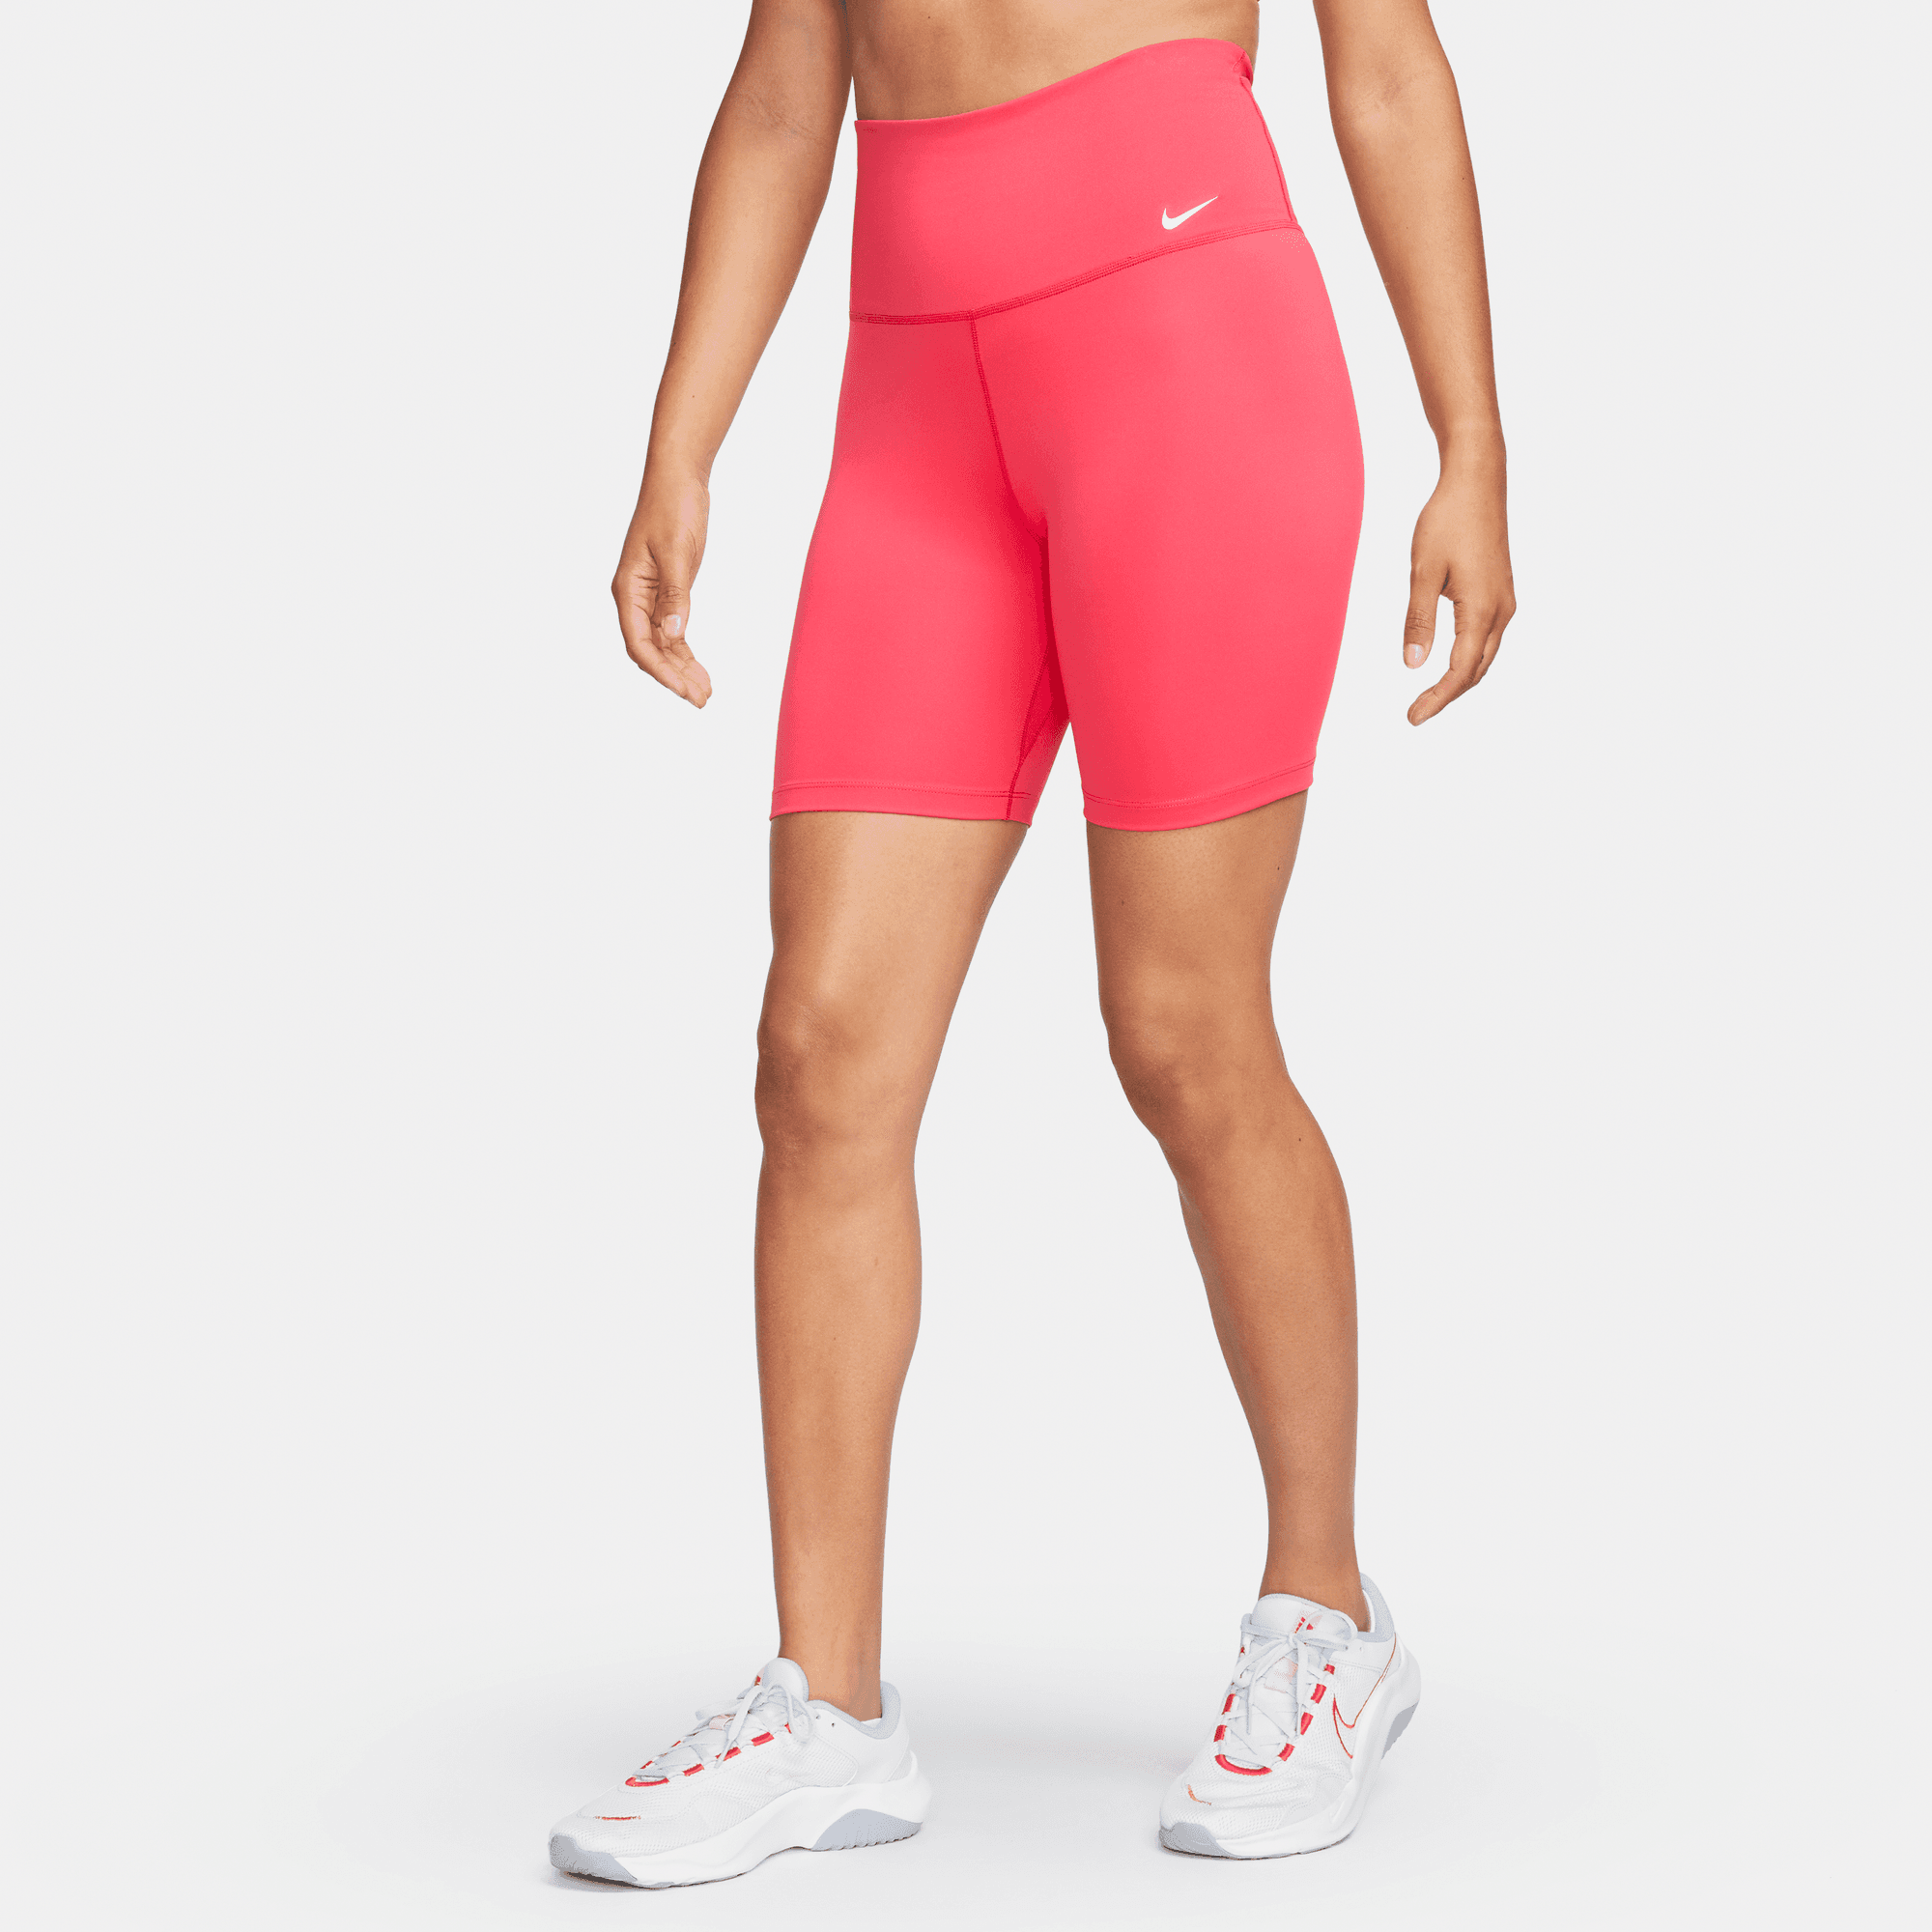 Nike high rise 7 inch legging shorts